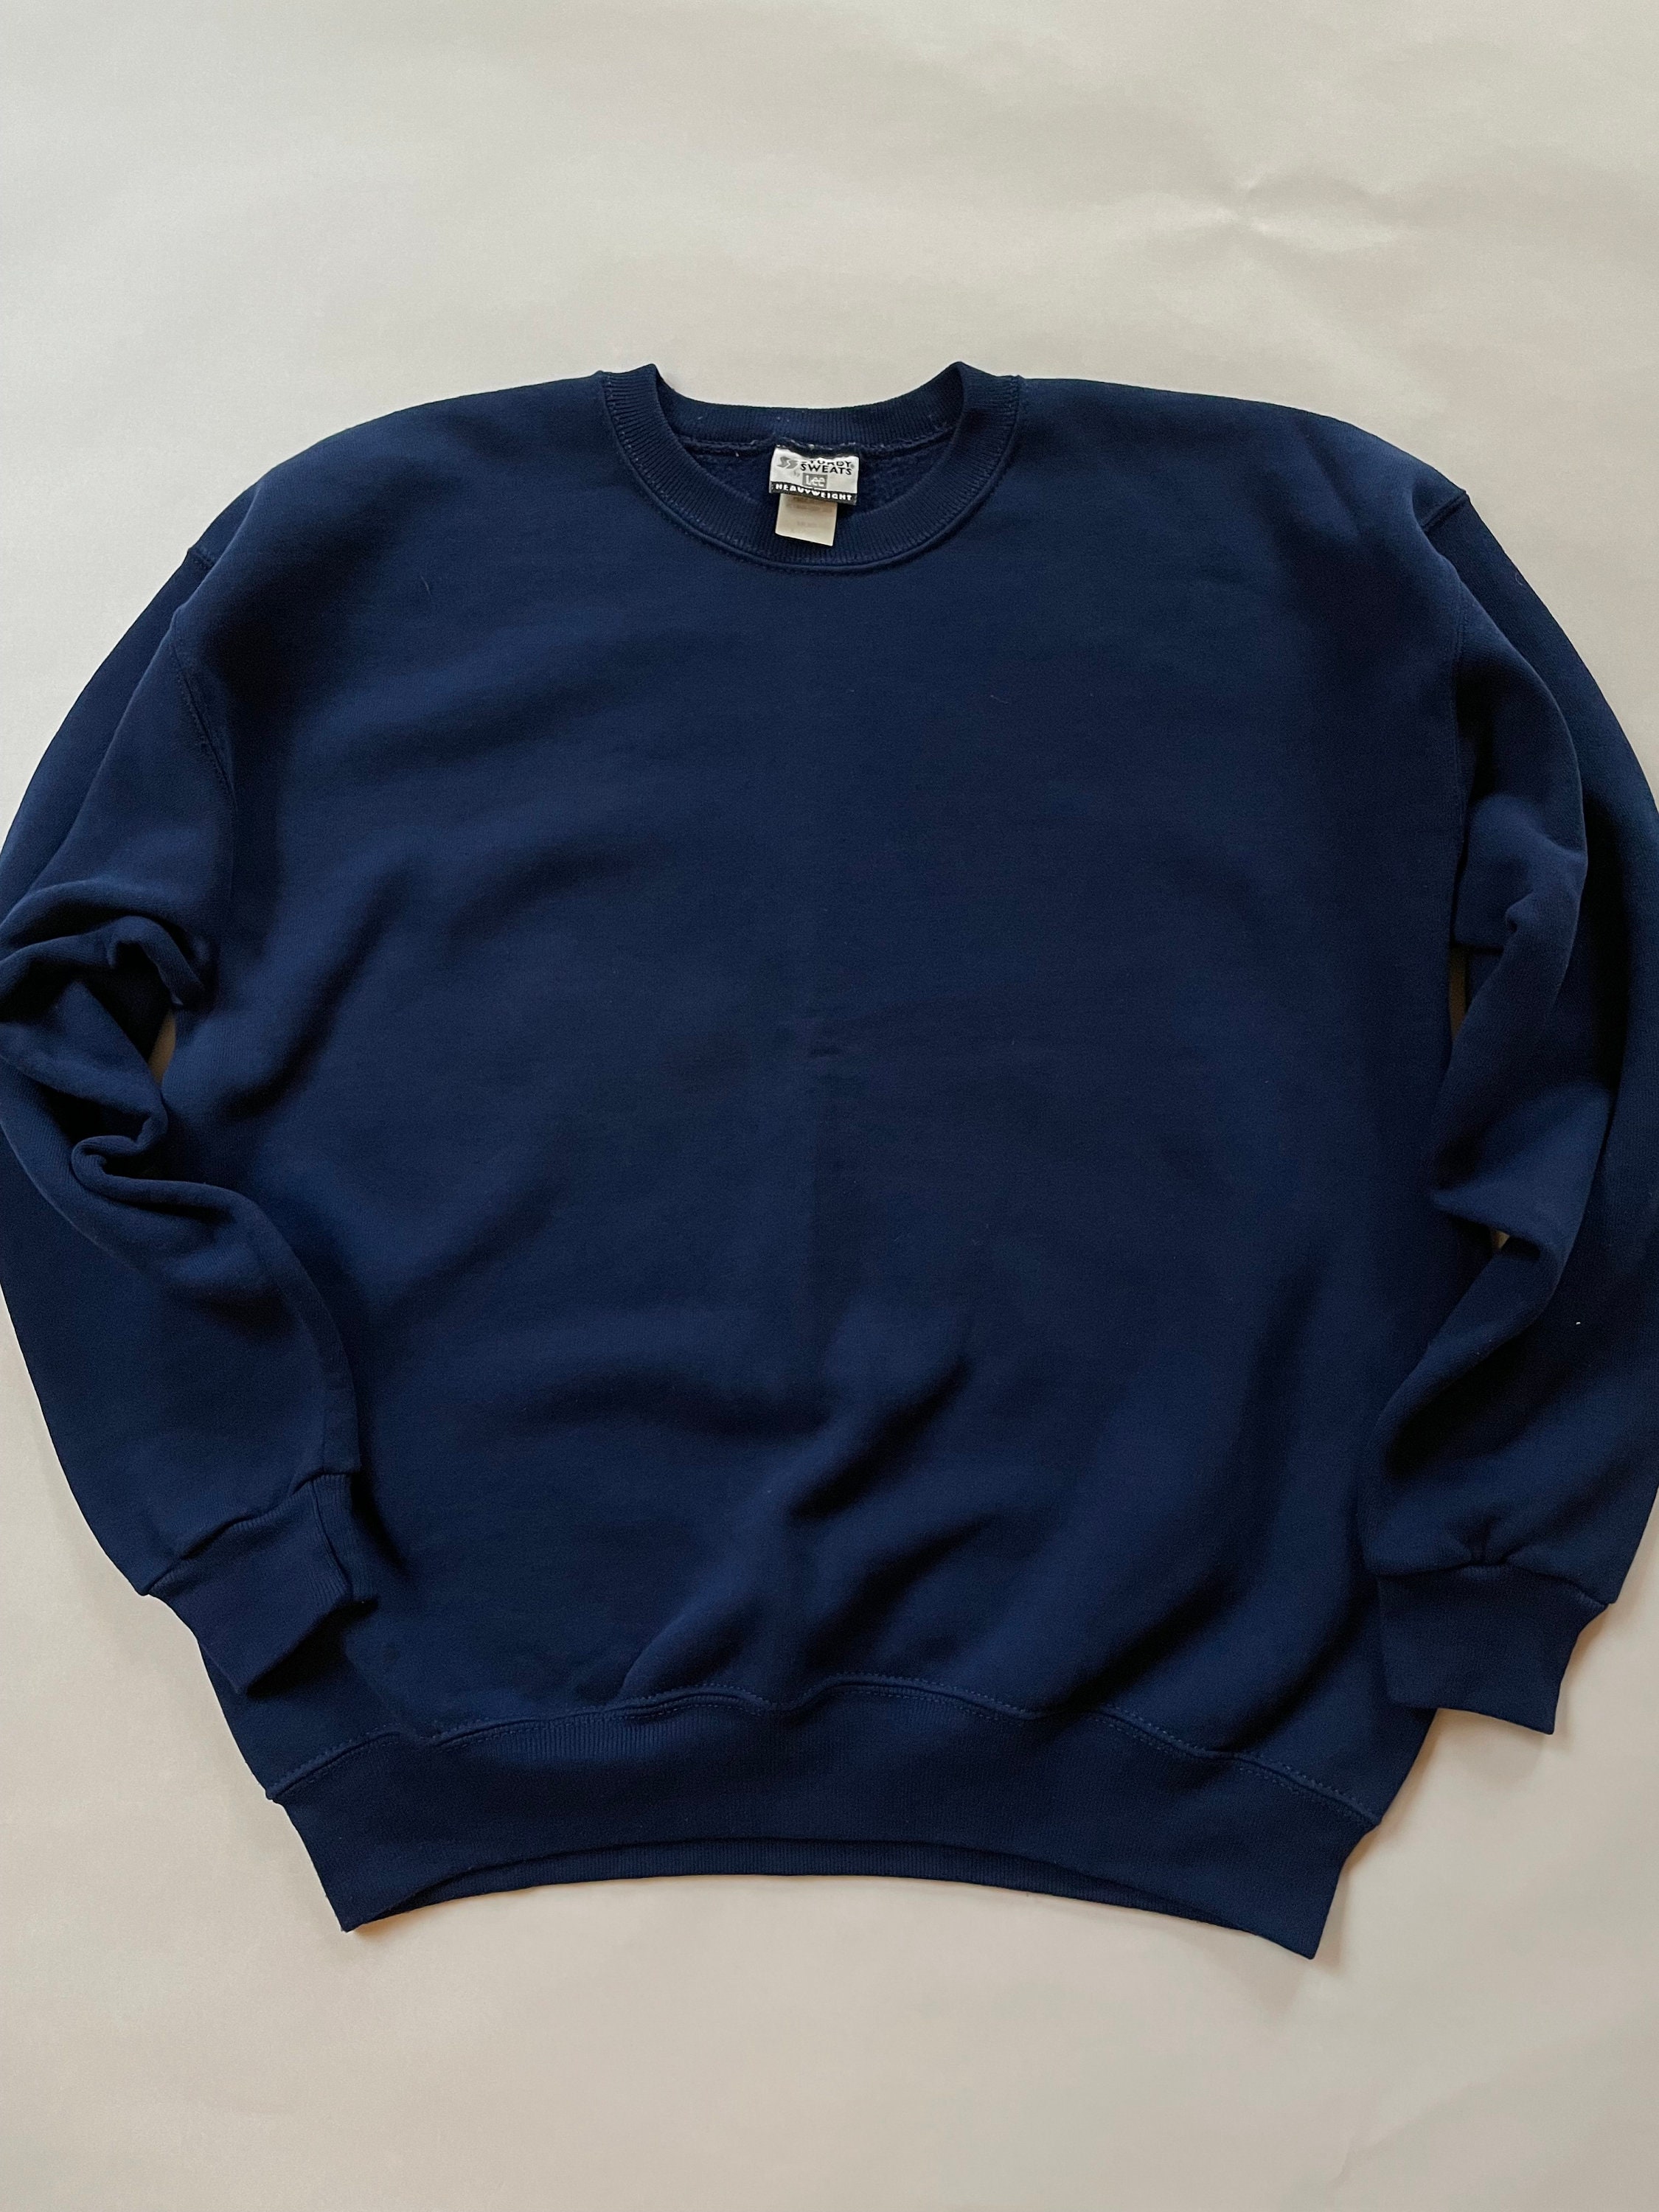 1990s XL Lee Sturdy Sweats Navy Blue Crewneck Sweatshirt Made in USA - Etsy